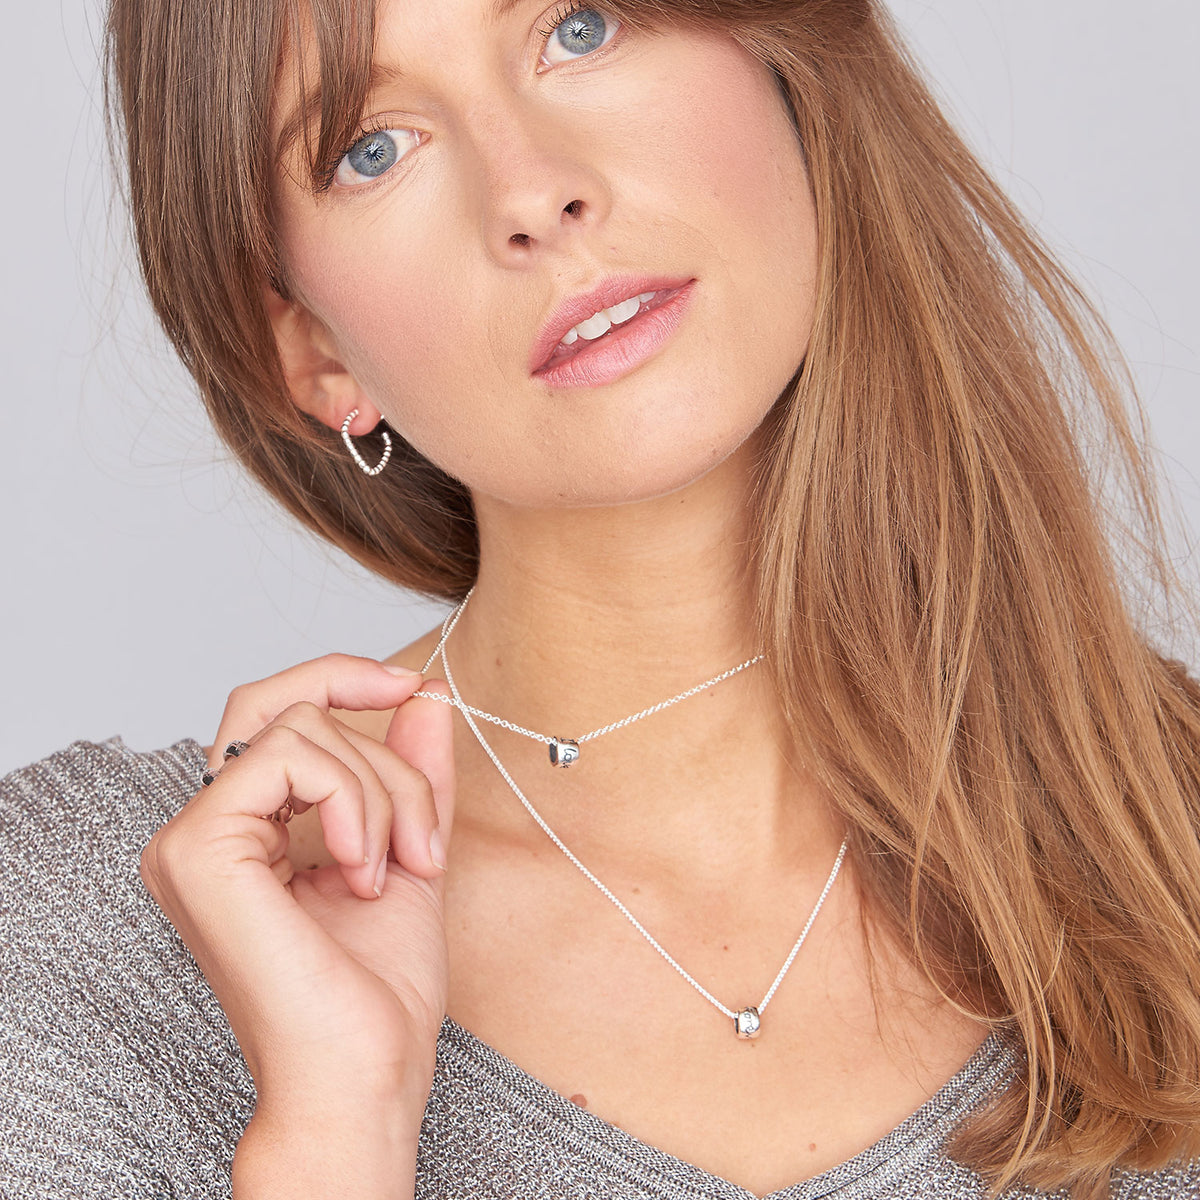 Bead charm necklace pendant from Scarlett Jewellery